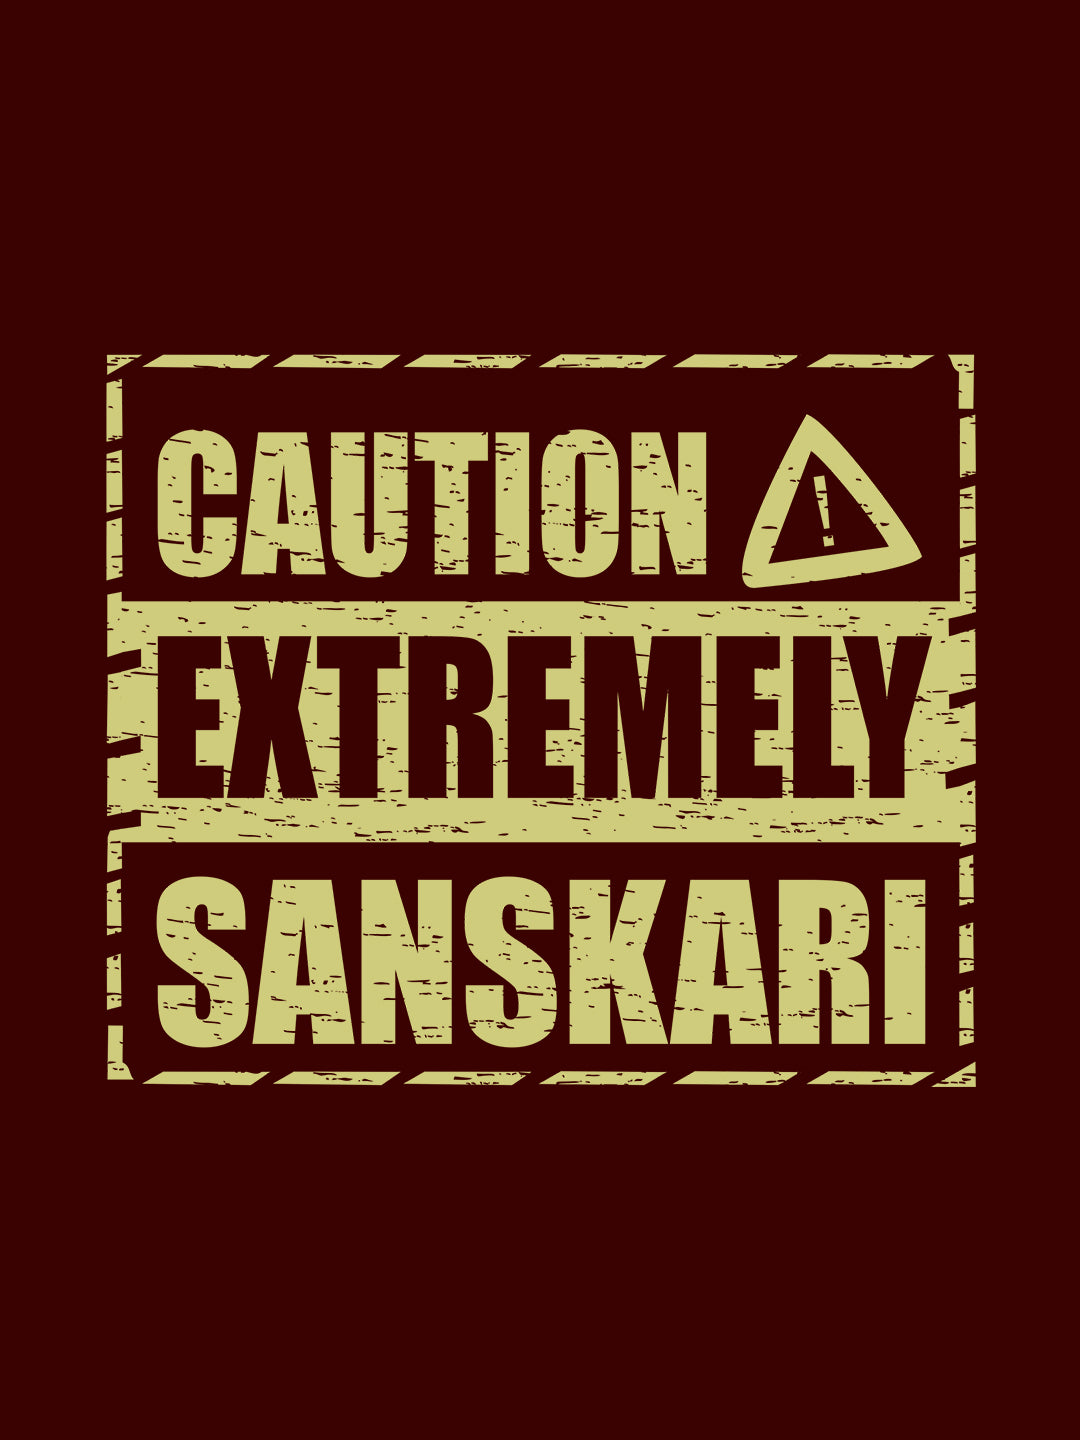 CAUTION EXTREMELY SANSKAARI MAROON T-SHIRT